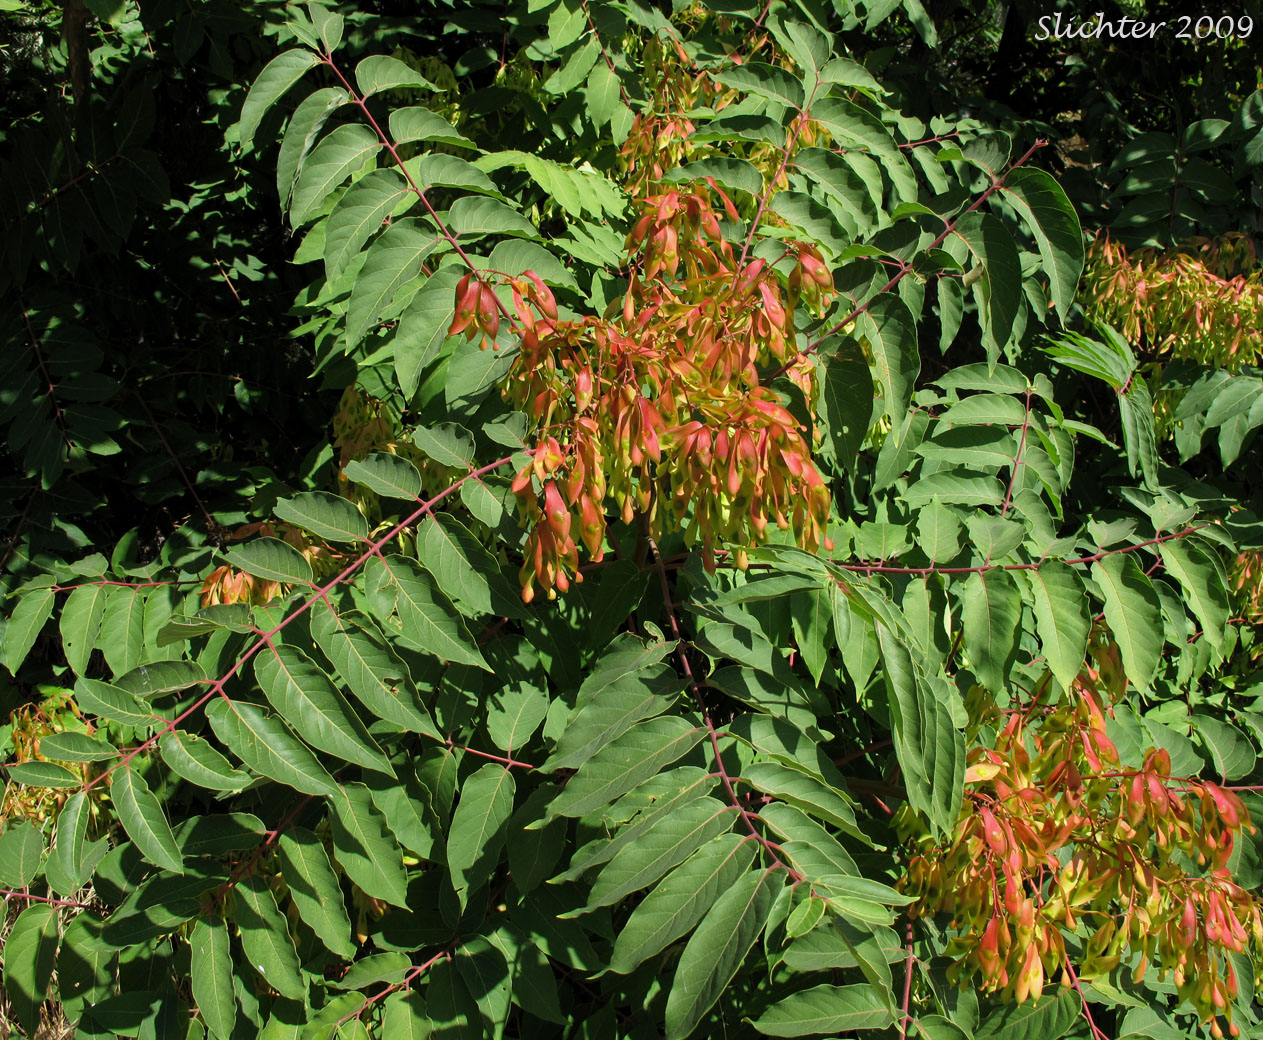 Tree-of-heaven: Ailanthus altissima (Synonym: Ailanthus glandulosa)